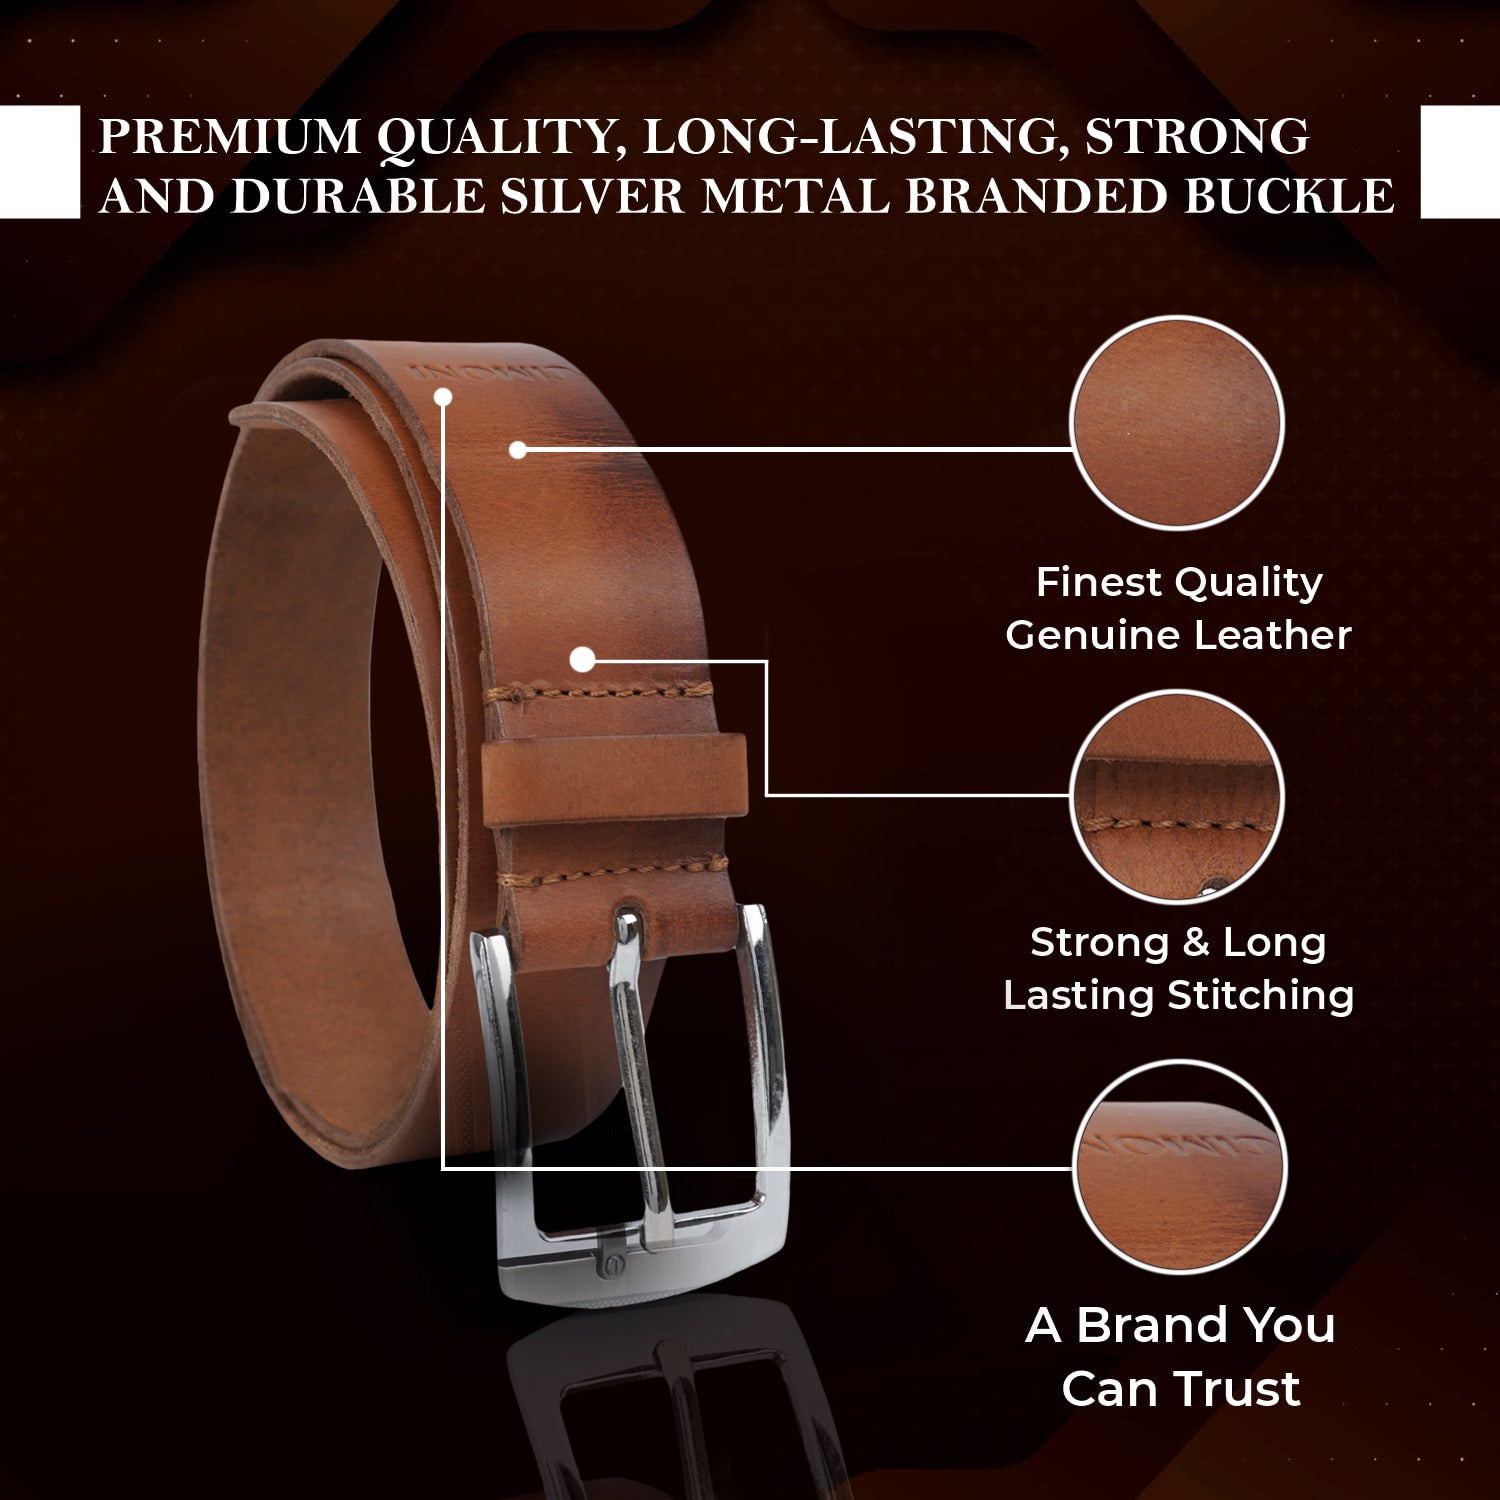 CIMONI Genuine Leather Classic Slim Design Casual Formal Dailyuse Belt For Men ( 1 Year Gurantee)